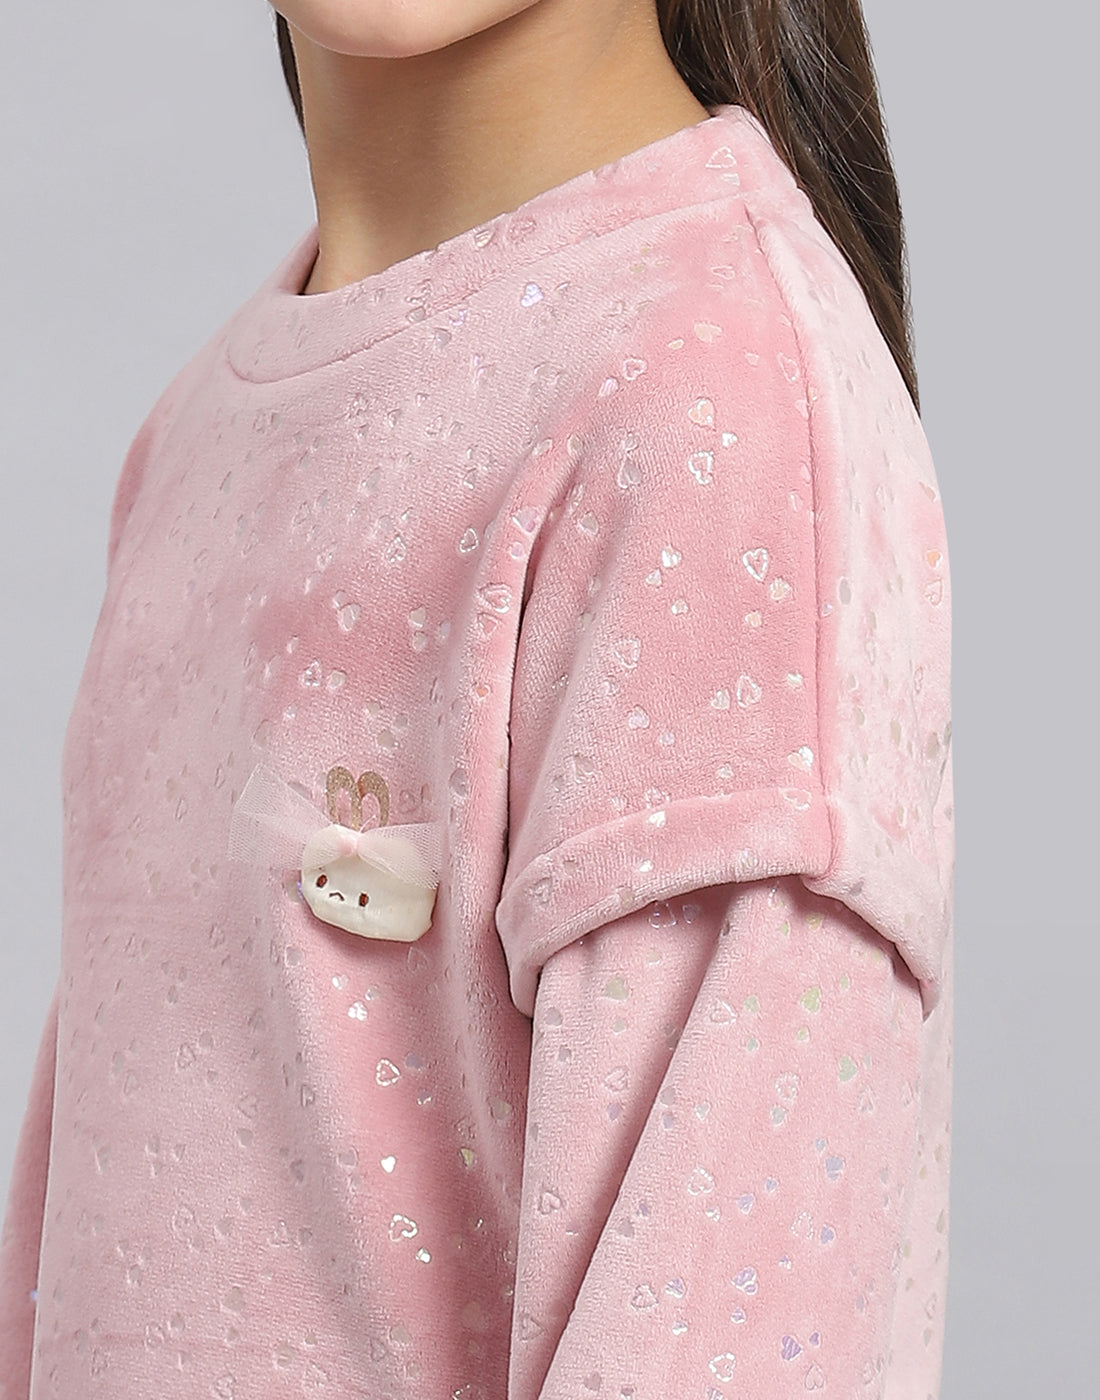 Girls Pink Printed Round Neck Full Sleeve Sweatshirt